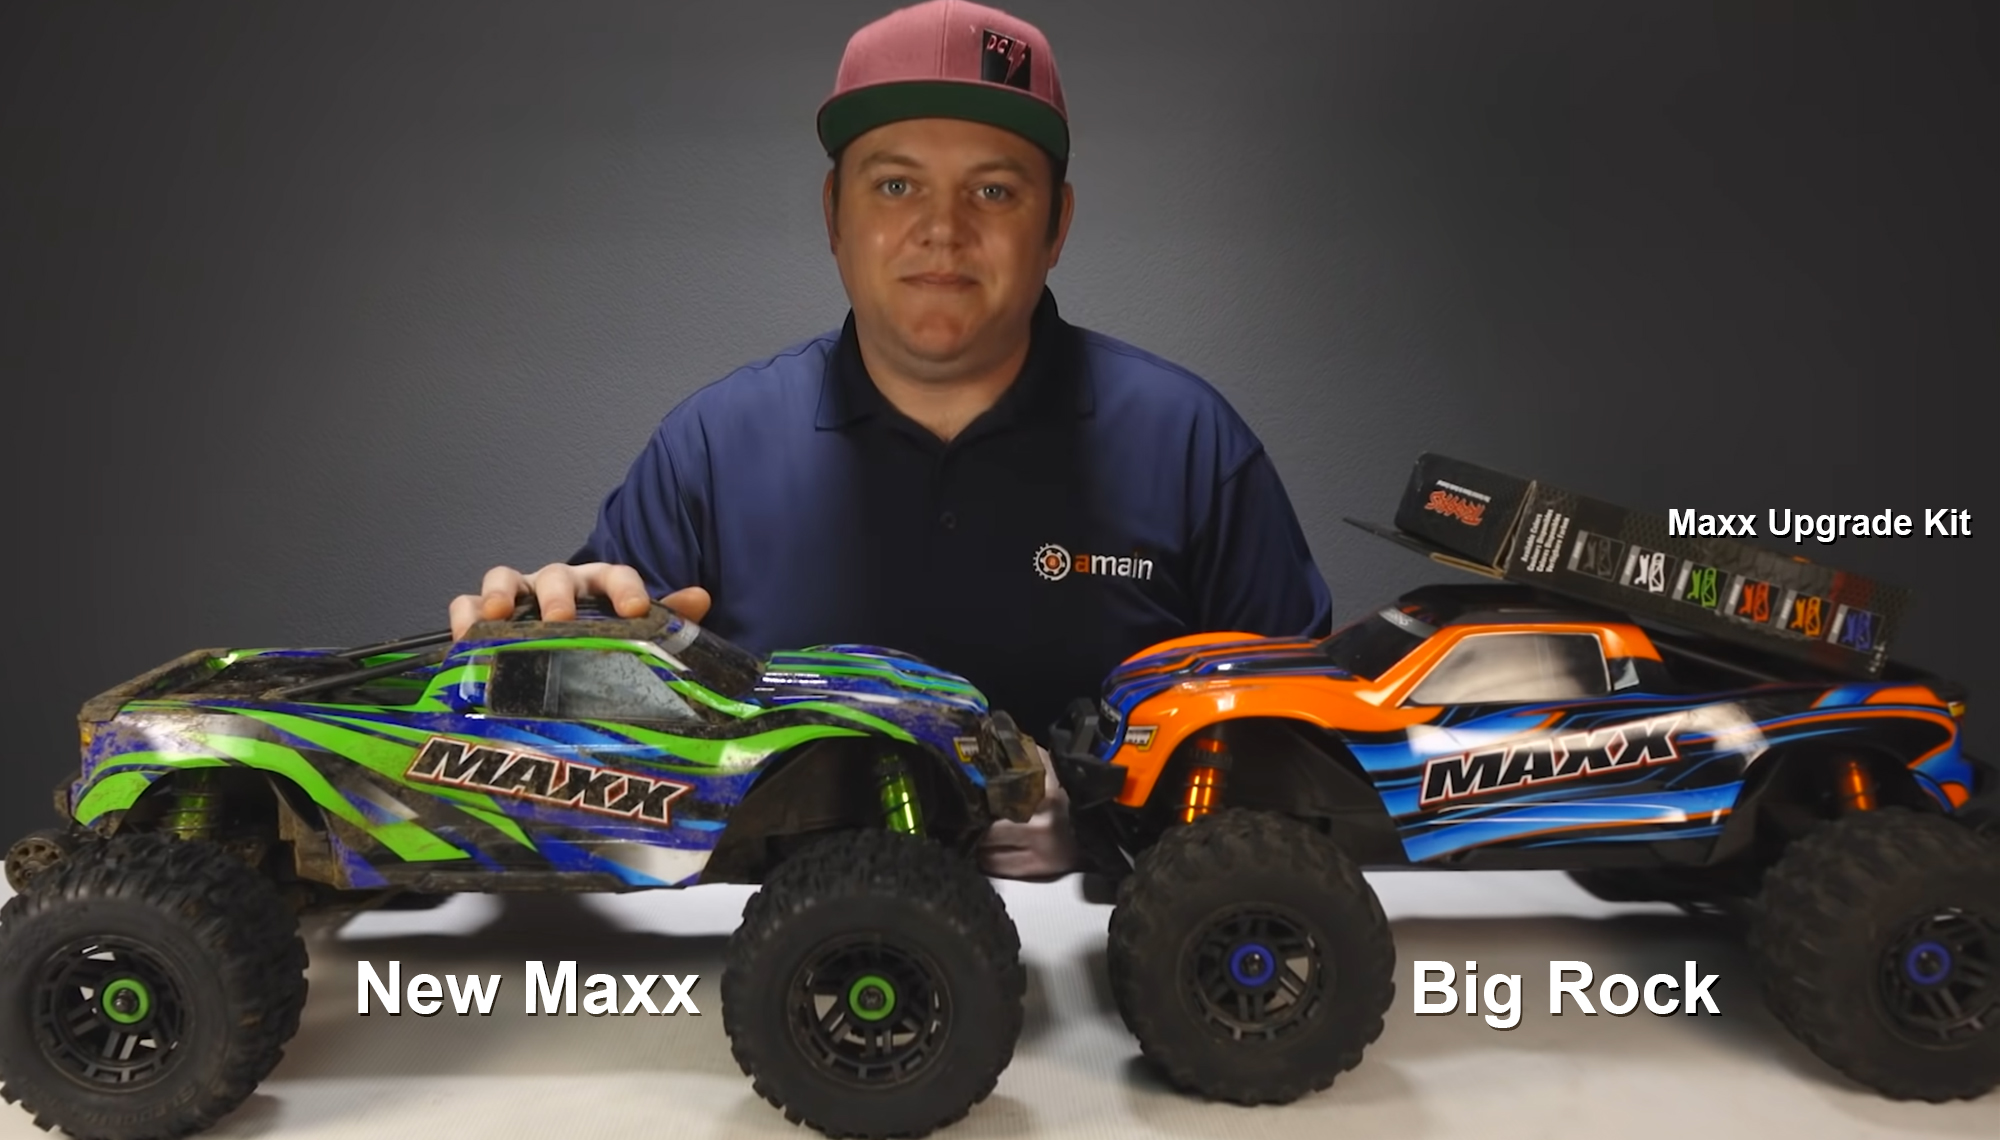 Traxxas Maxx Widemaxx vs. Original Maxx with Upgrade Kit